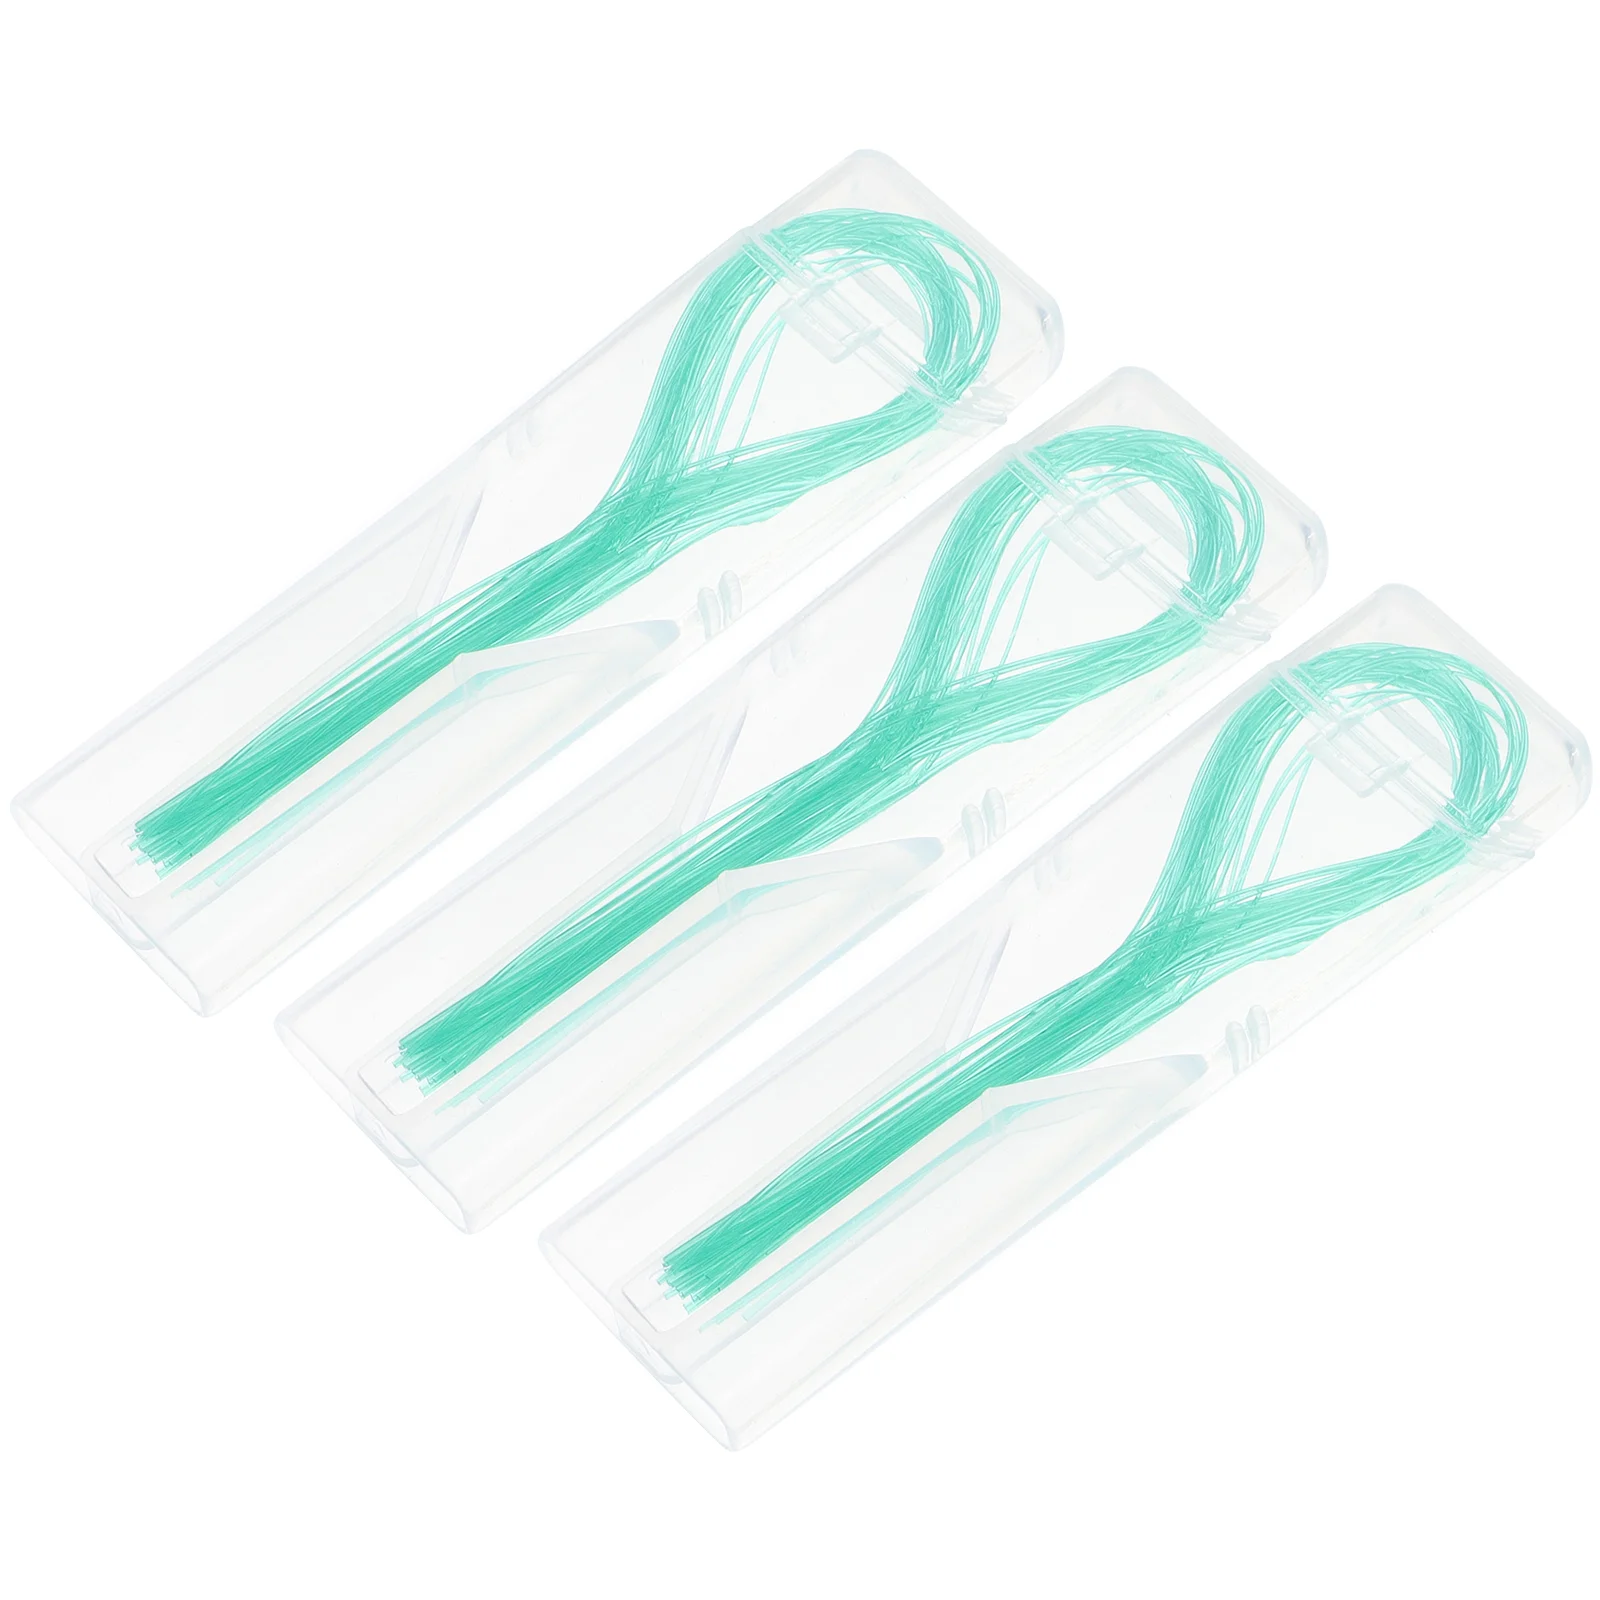 

105 Pcs Dental Floss Threading Professional Threaders Brace for Braces Teeth Nylon Cleaning